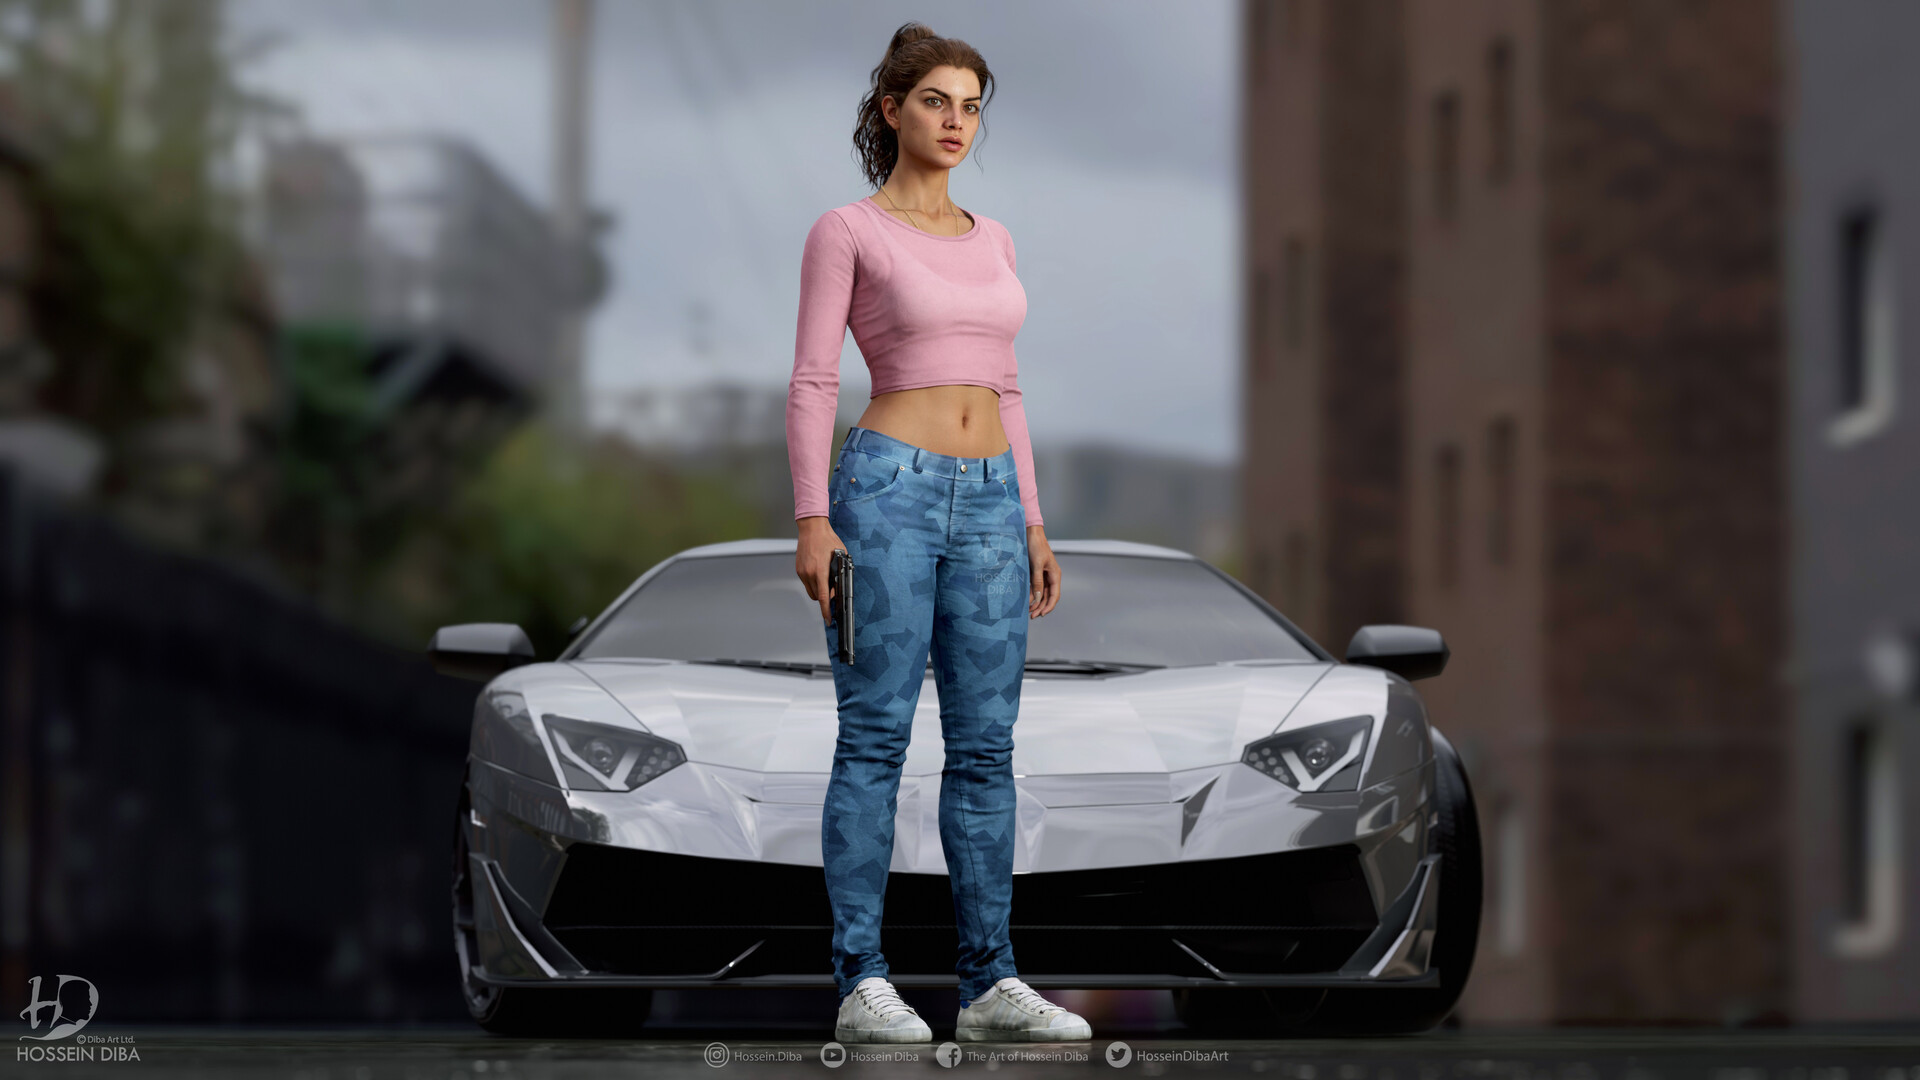 Creating Lucia - Hossein Diba's 3D Model of GTA 6's Female Protagonist 